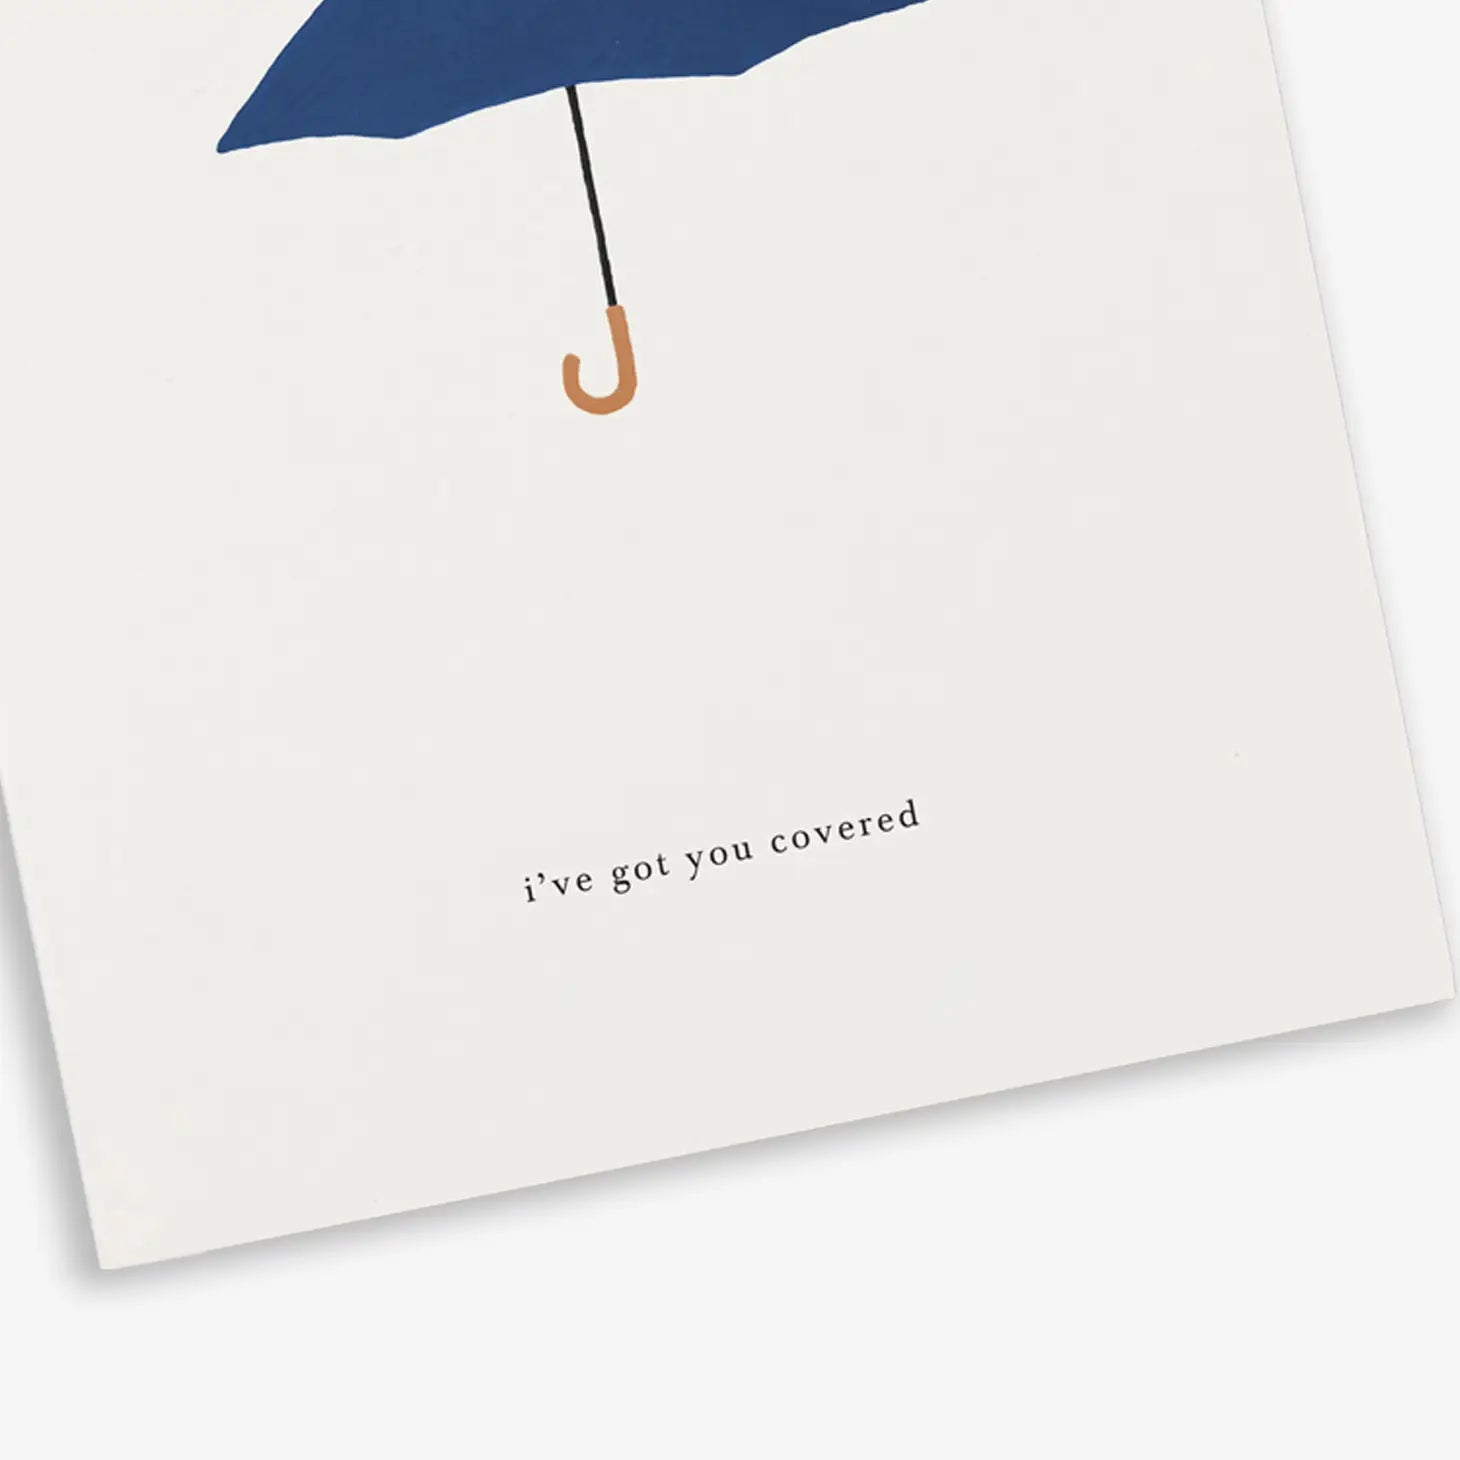 Umbrella (I've got you covered) Sympathy card